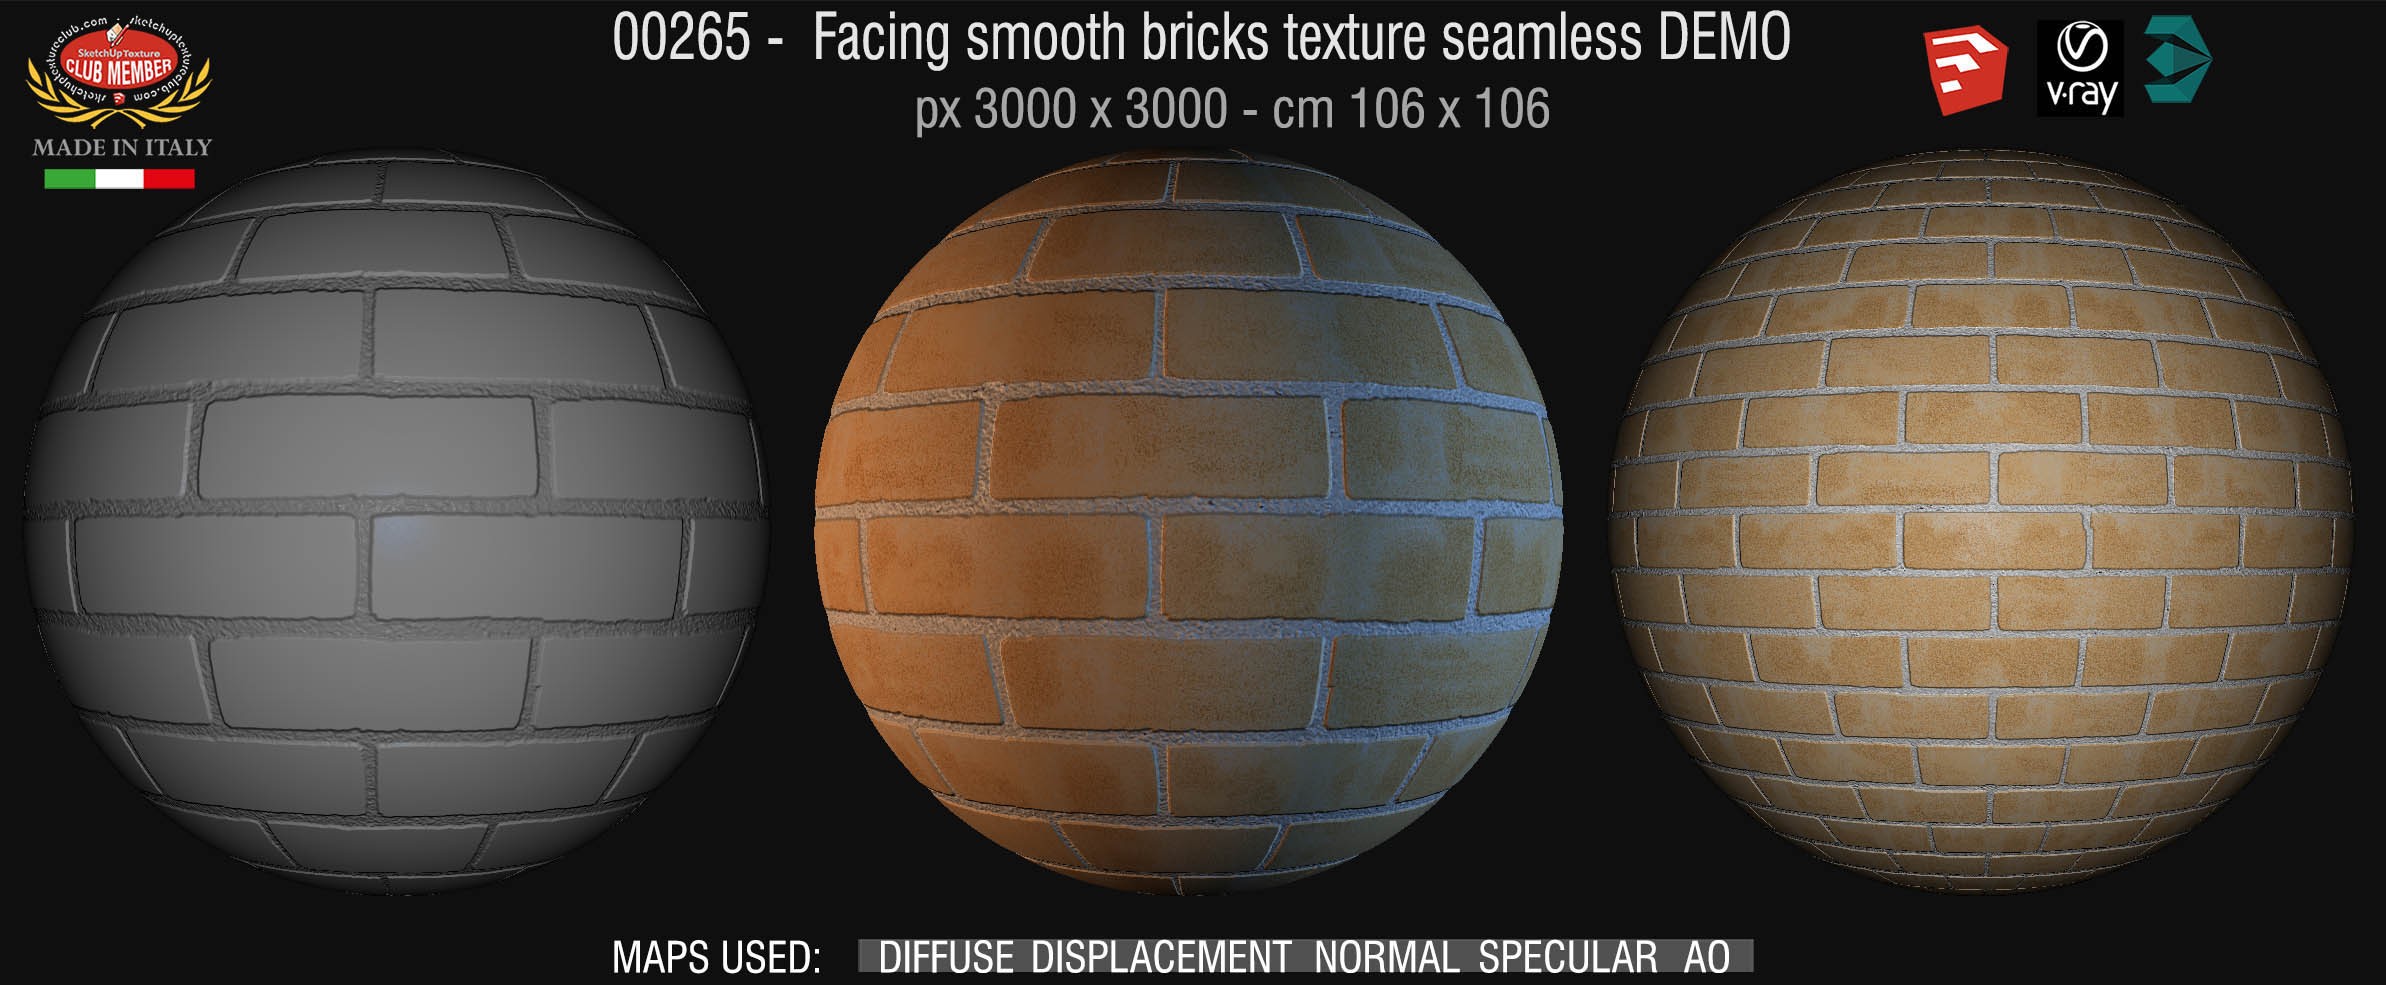 00265 Facing smooth bricks texture seamless + maps DEMO